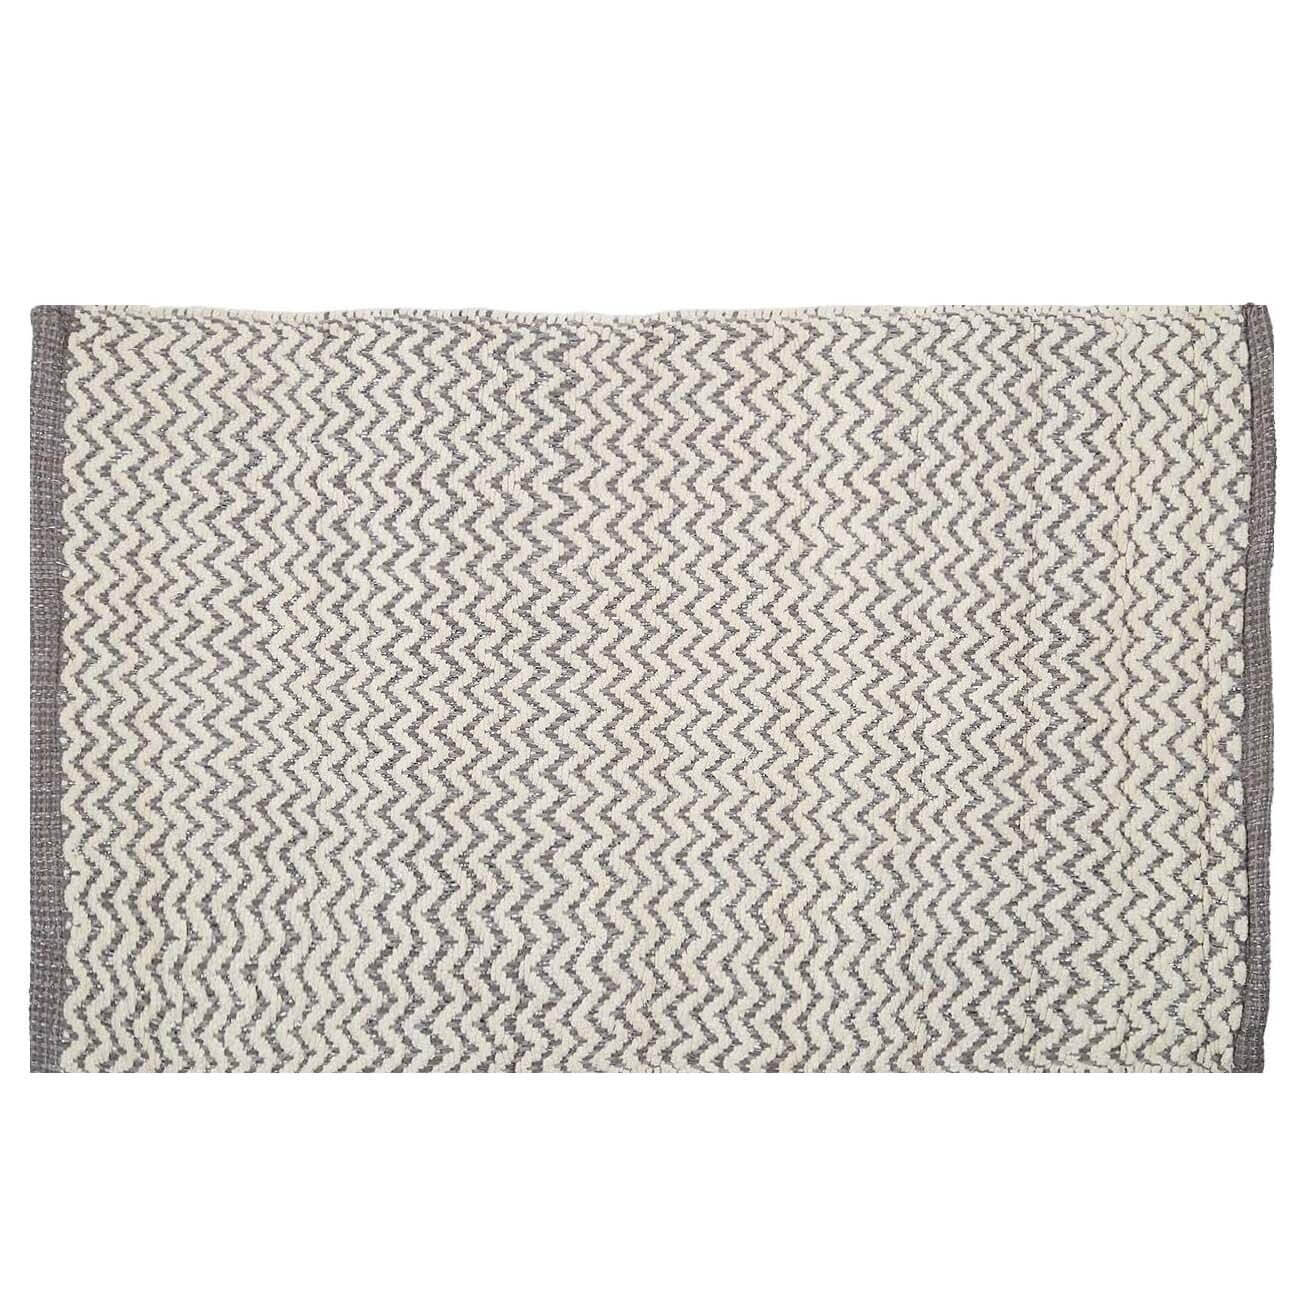 Коврик, 50х80 см, хлопок, бело-серый, Зигзаги с люрексом, Shiny threads spa коврик fora